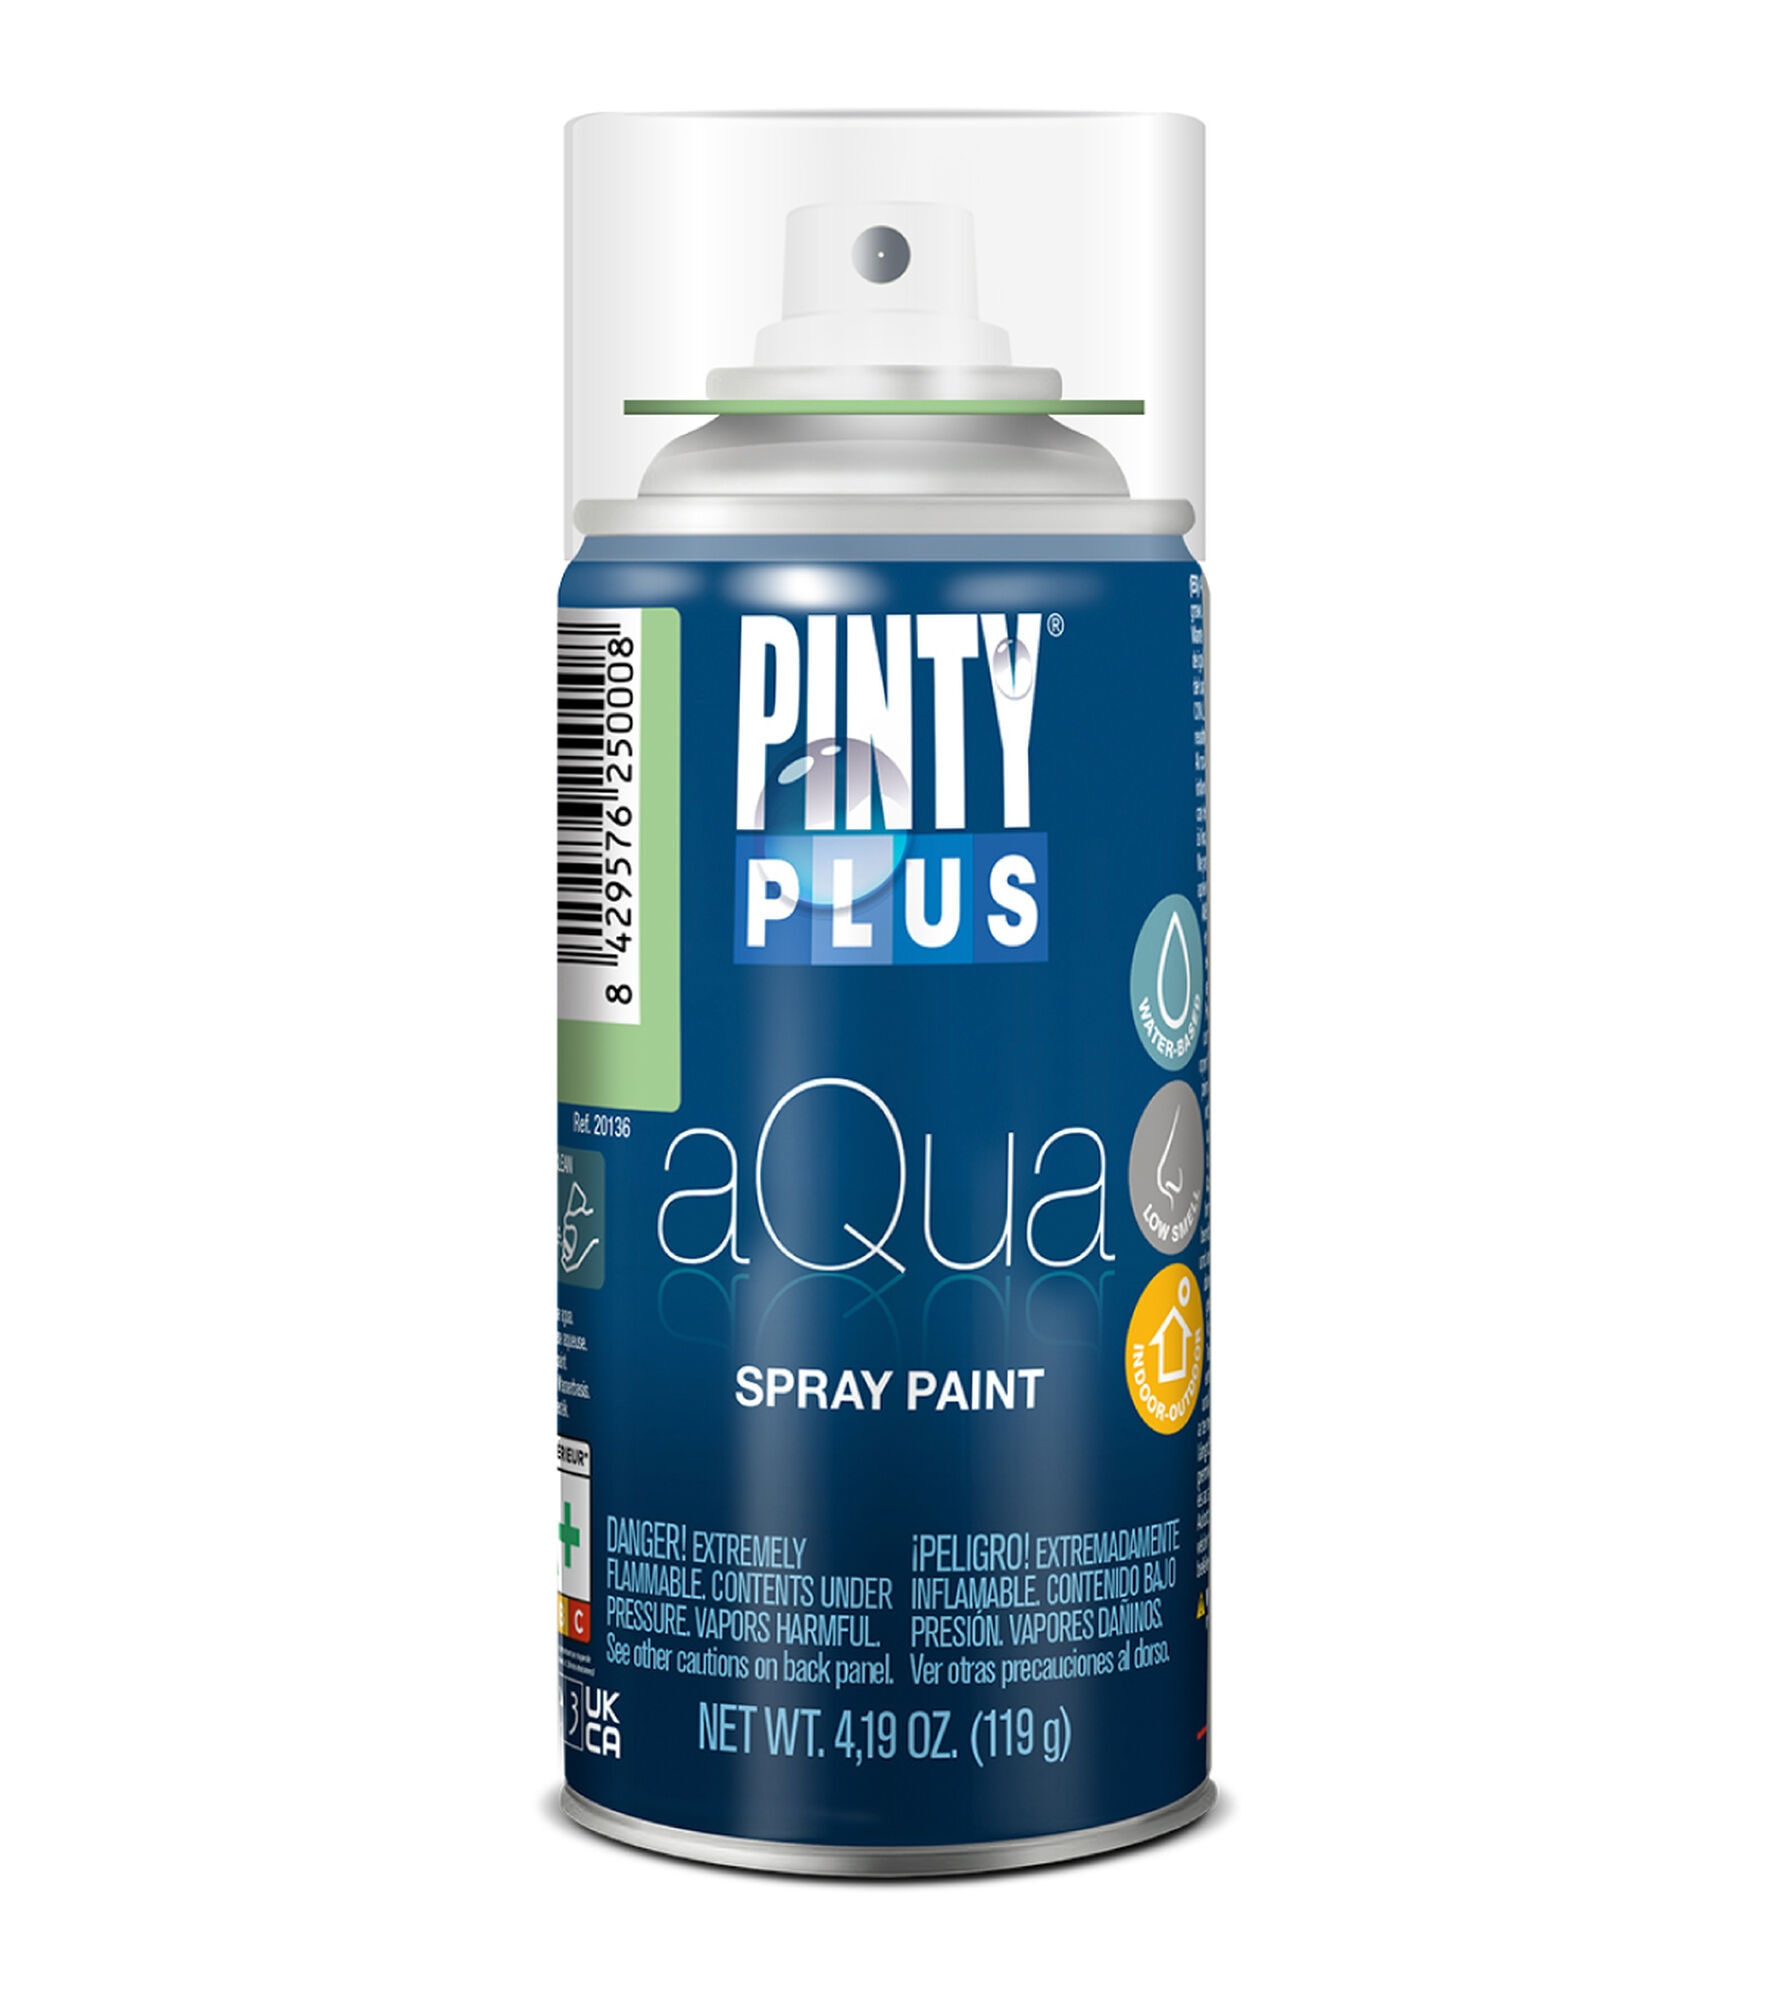 Pintyplus Aqua Spray Paint, 8 Color Set of Water Based Mini Spray